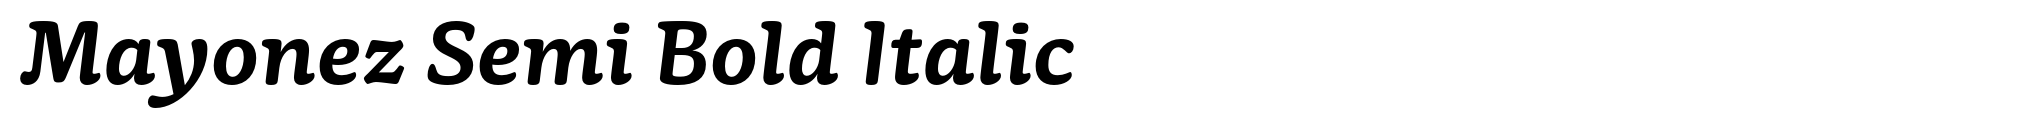 Mayonez Semi Bold Italic image